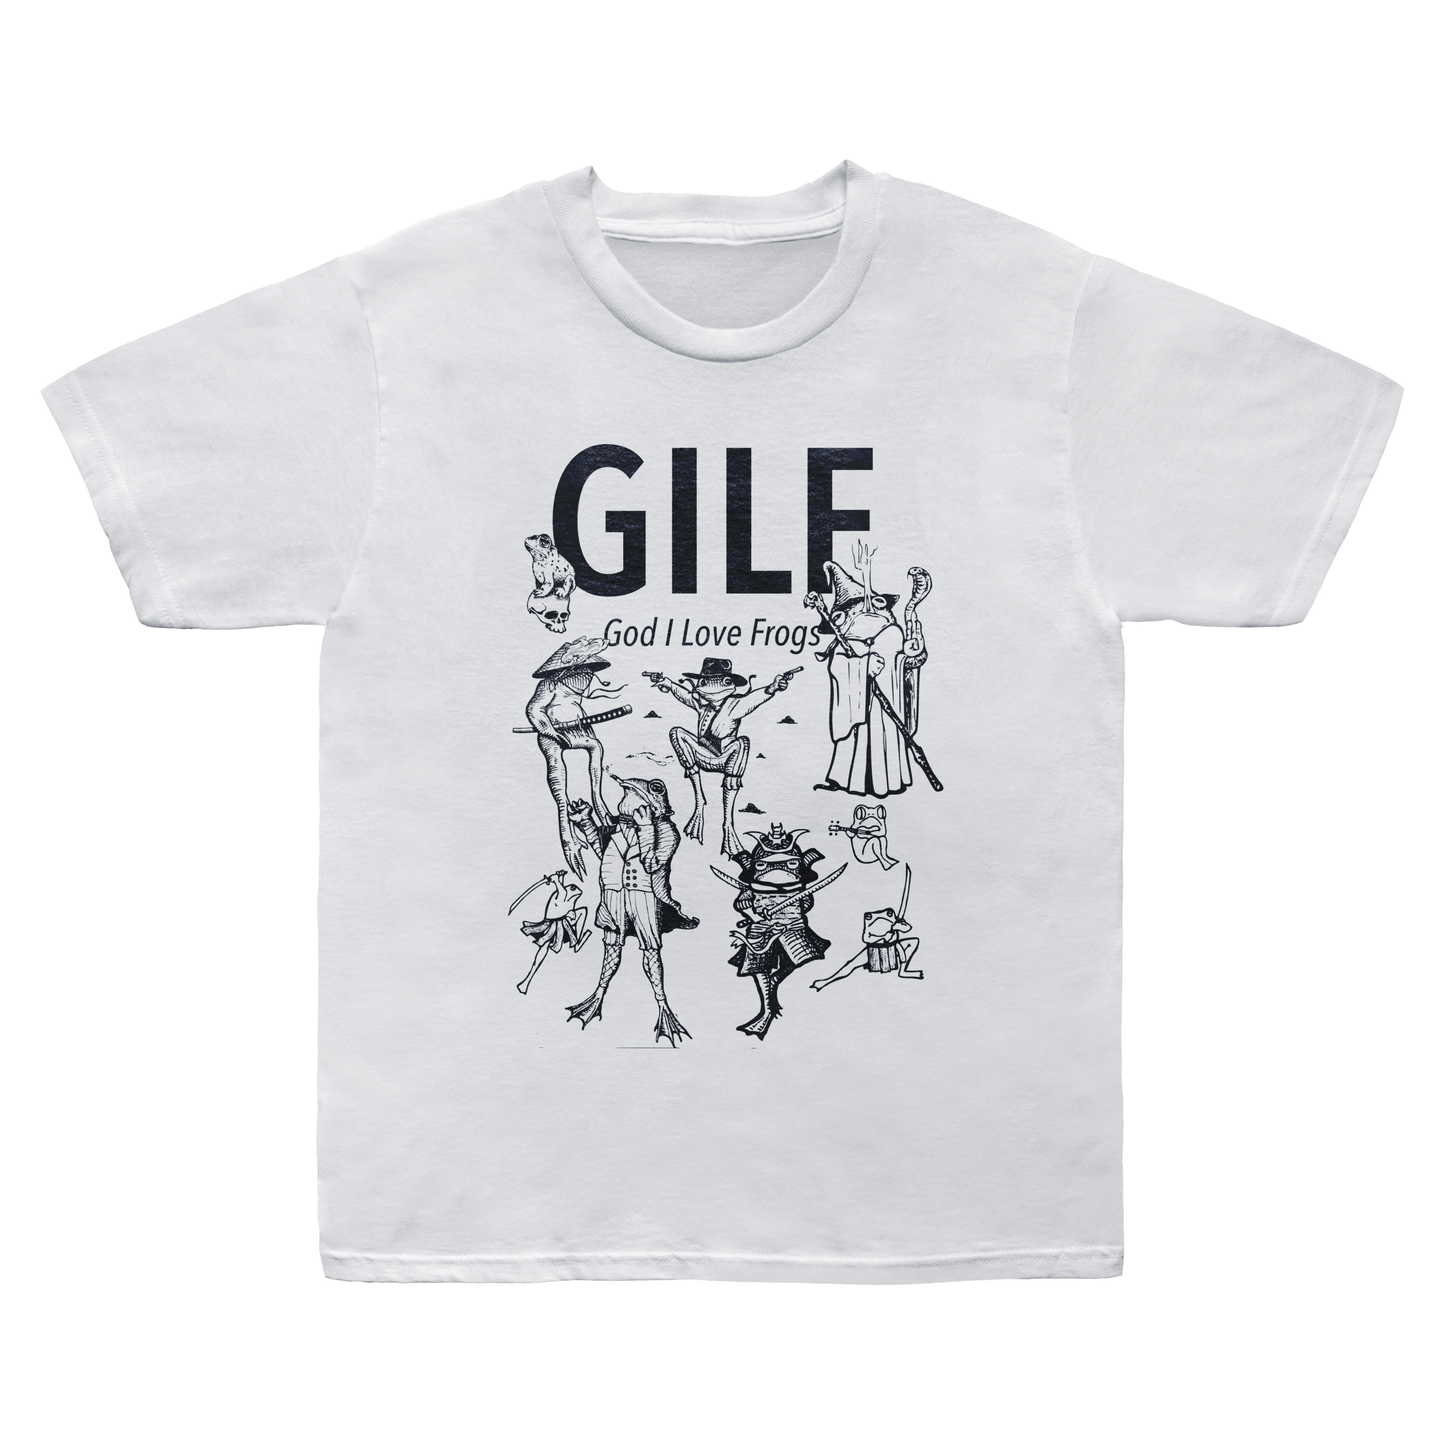 GlLF T-Shirt